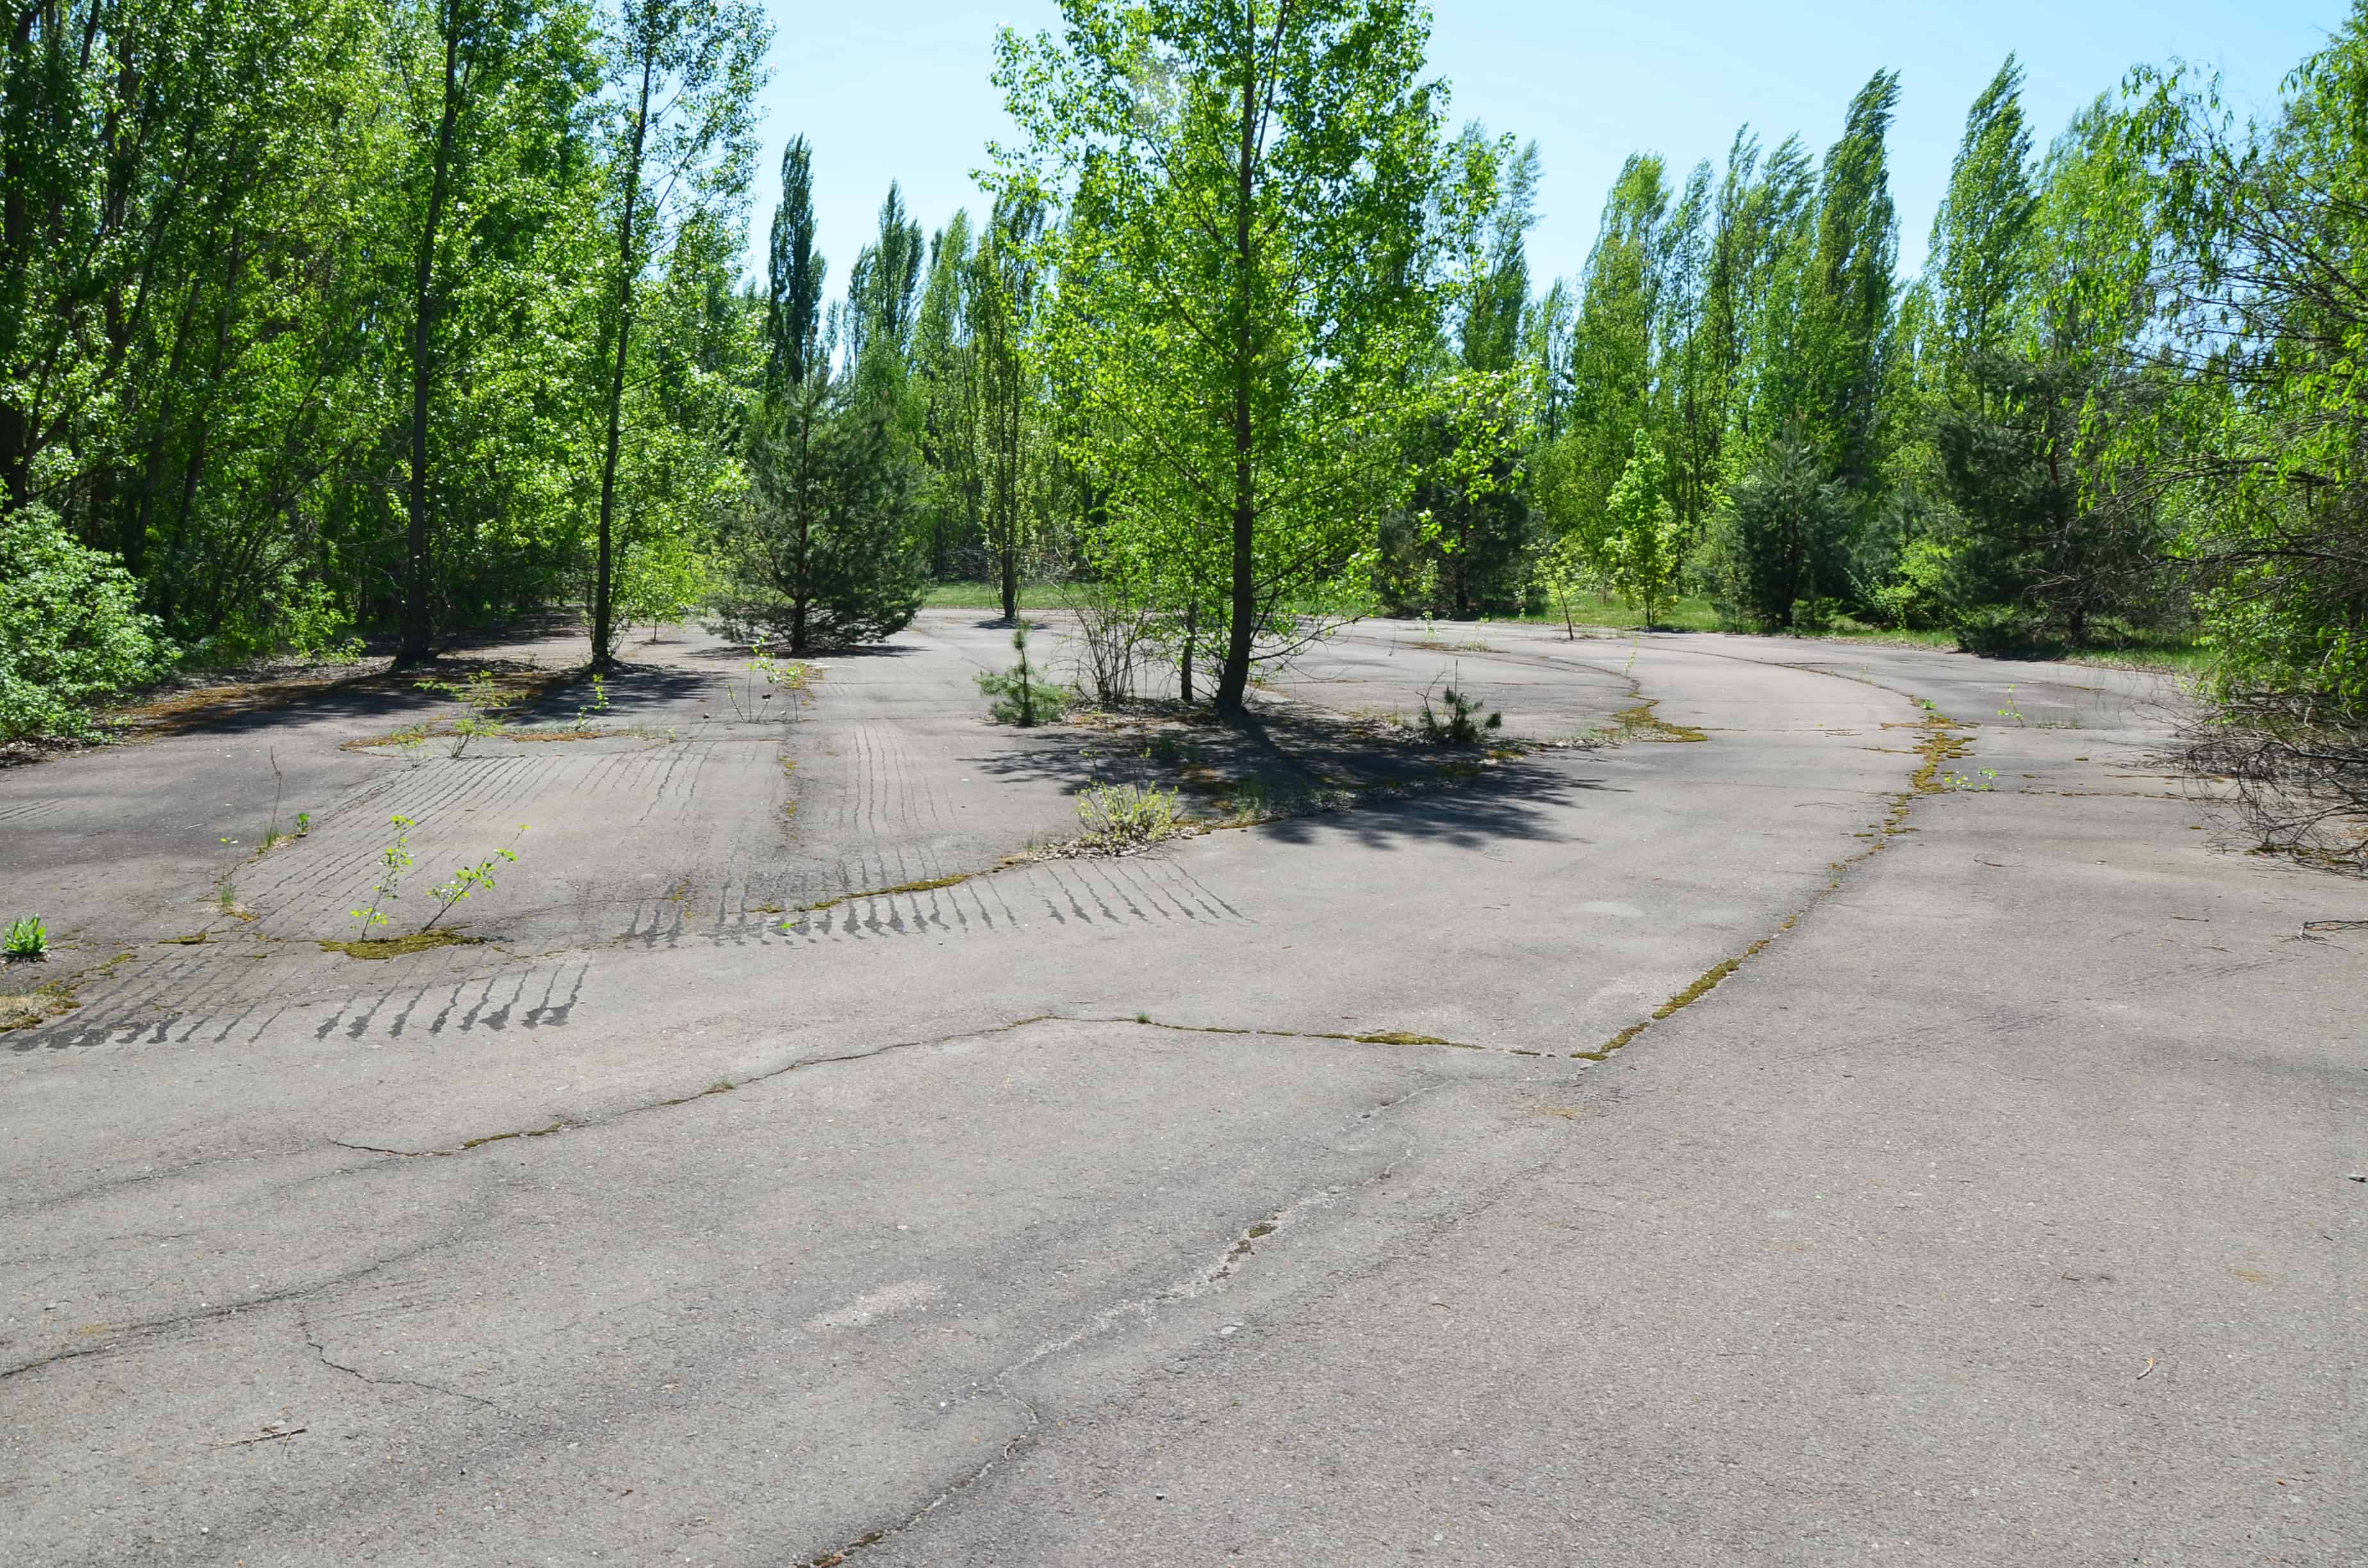 Track at Stadium "Avangard" in Pripyat, Chernobyl Exclusion Zone, Ukraine